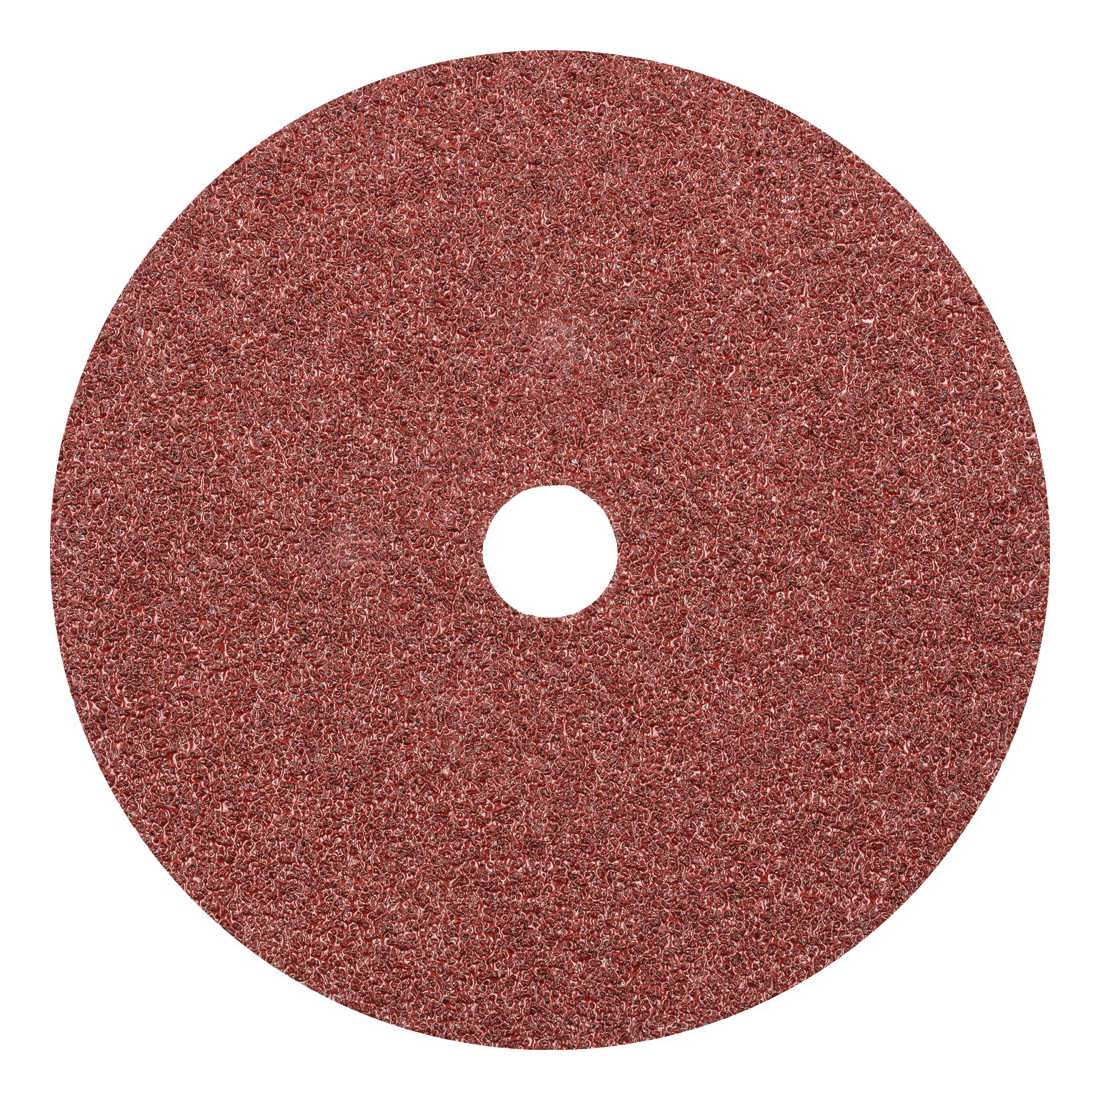 PFERD 62702 Standard Coated Abrasive Disc, 7 in Dia, 7/8 in Center Hole, 24 Grit, Aluminum Oxide Abrasive, Arbor Attachment